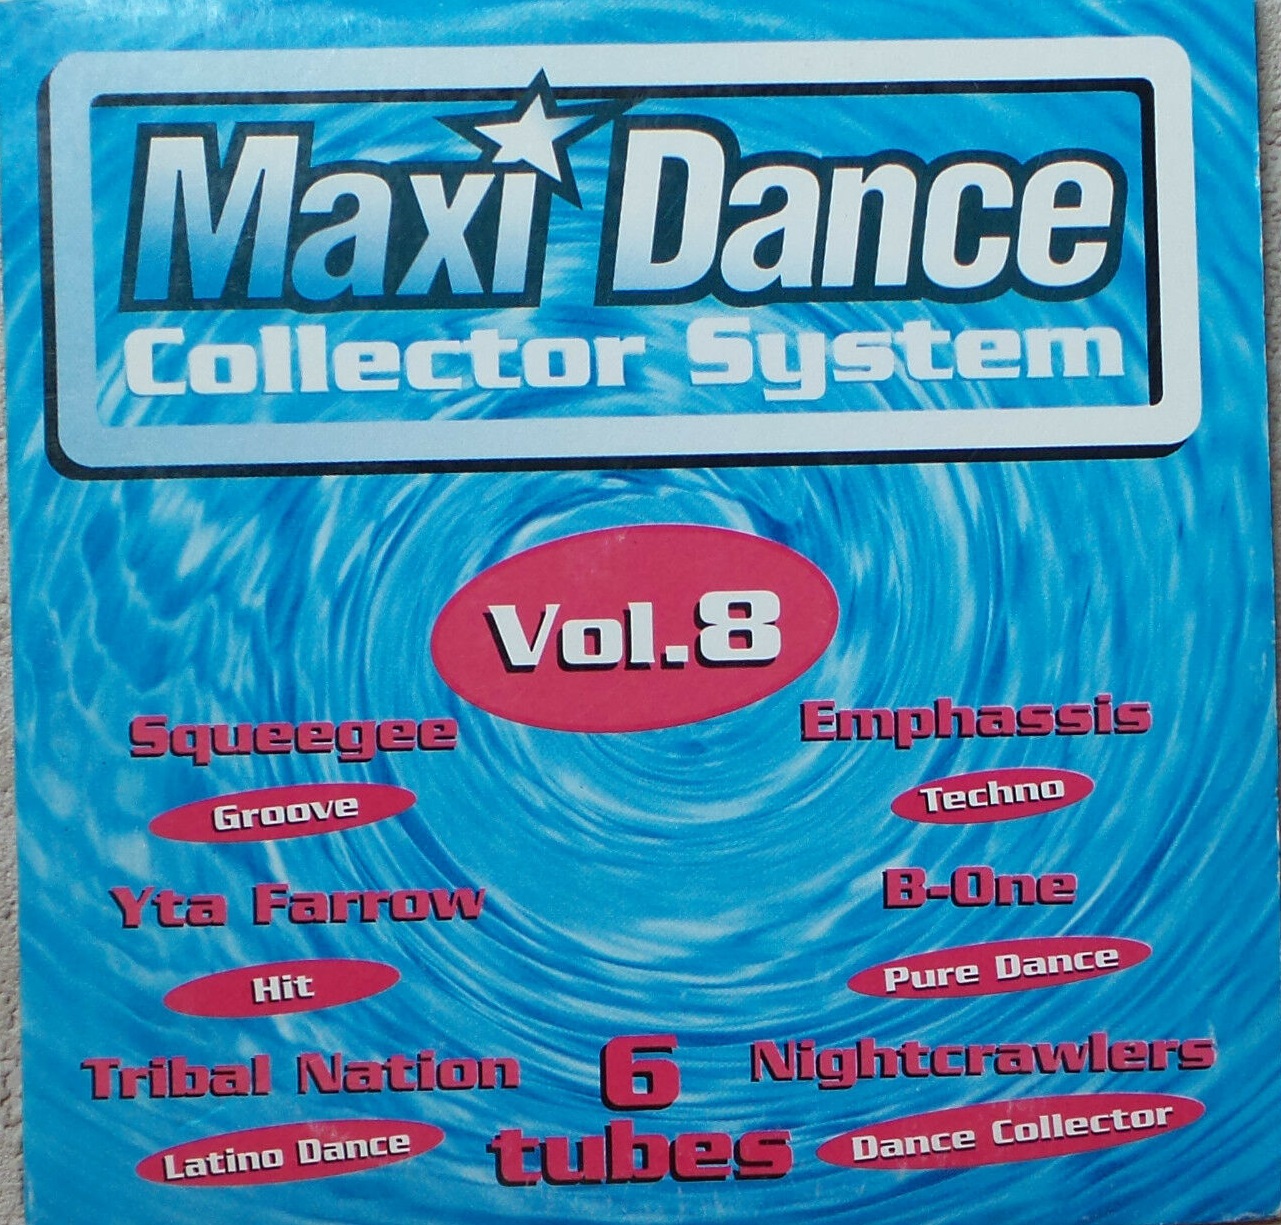 Maxi dance